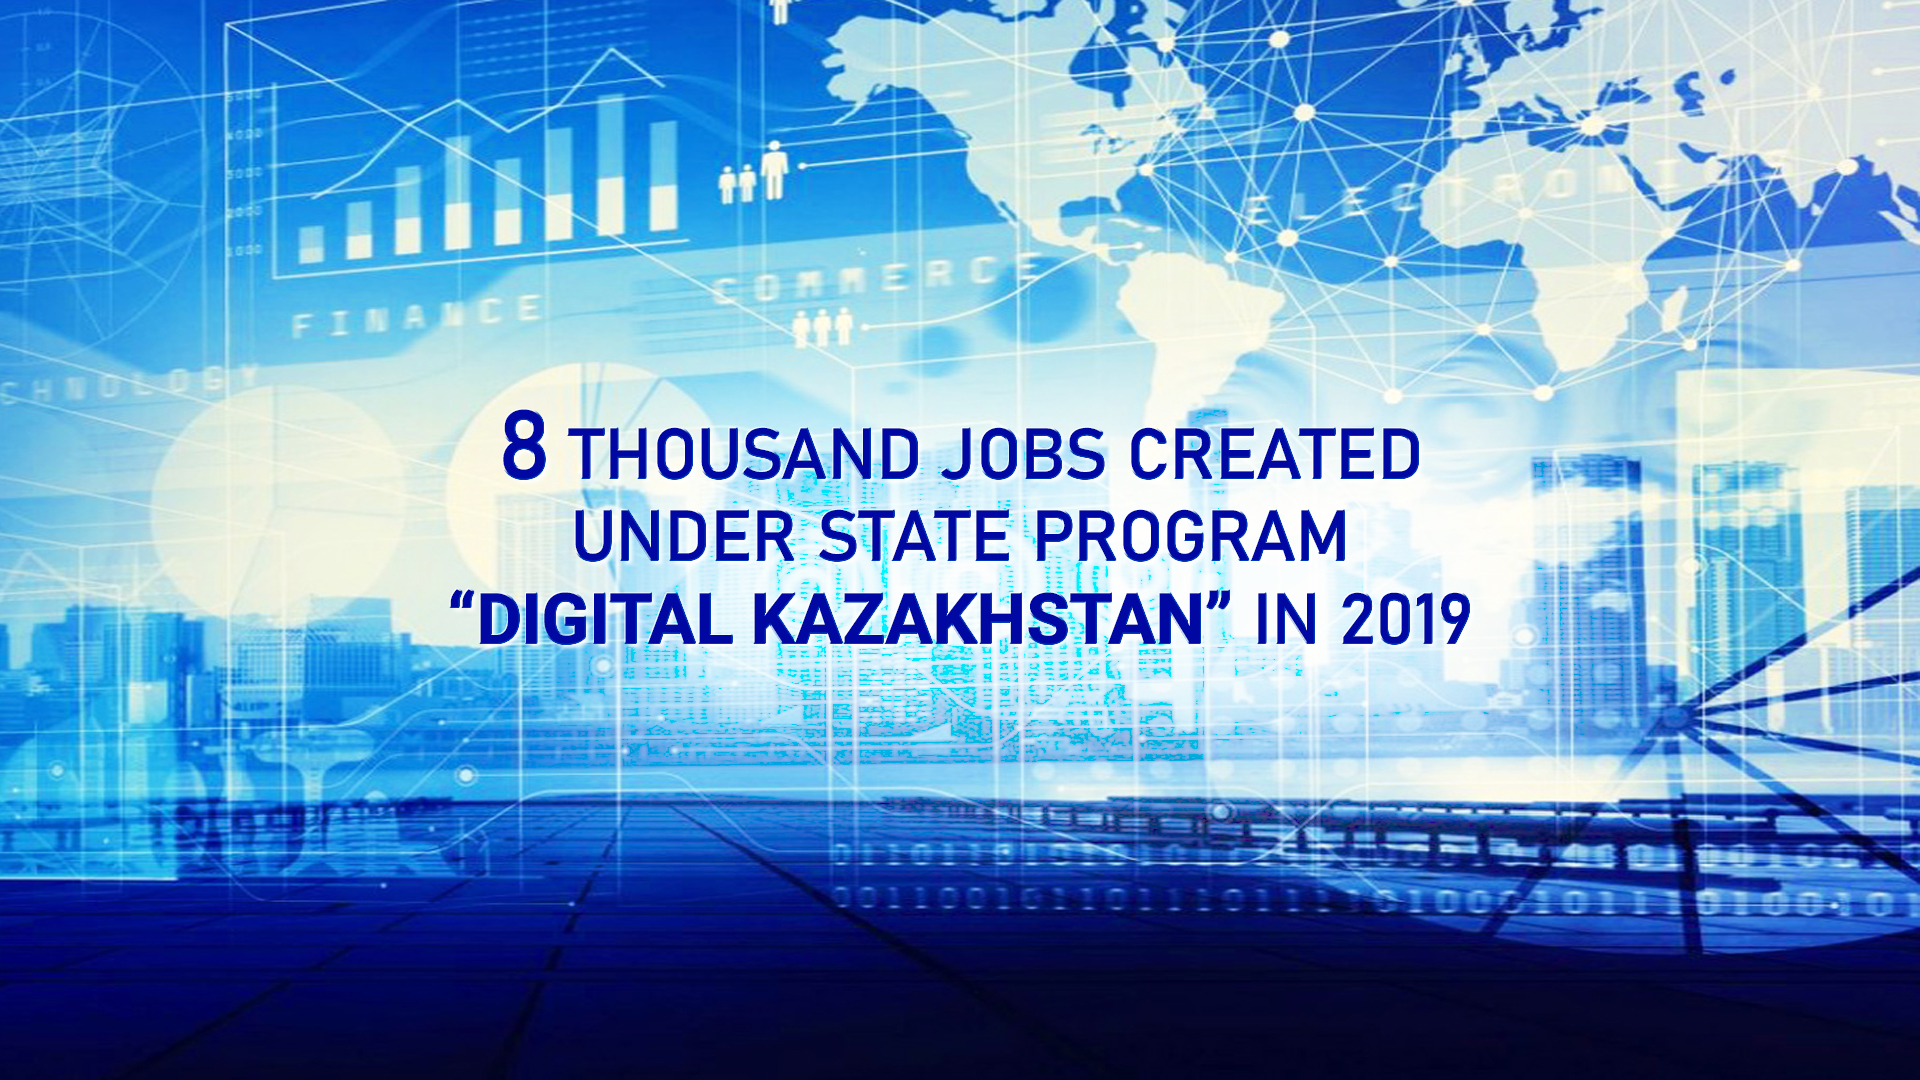 Eight thousand jobs created under state program "Digital Kazakhstan" in 2019